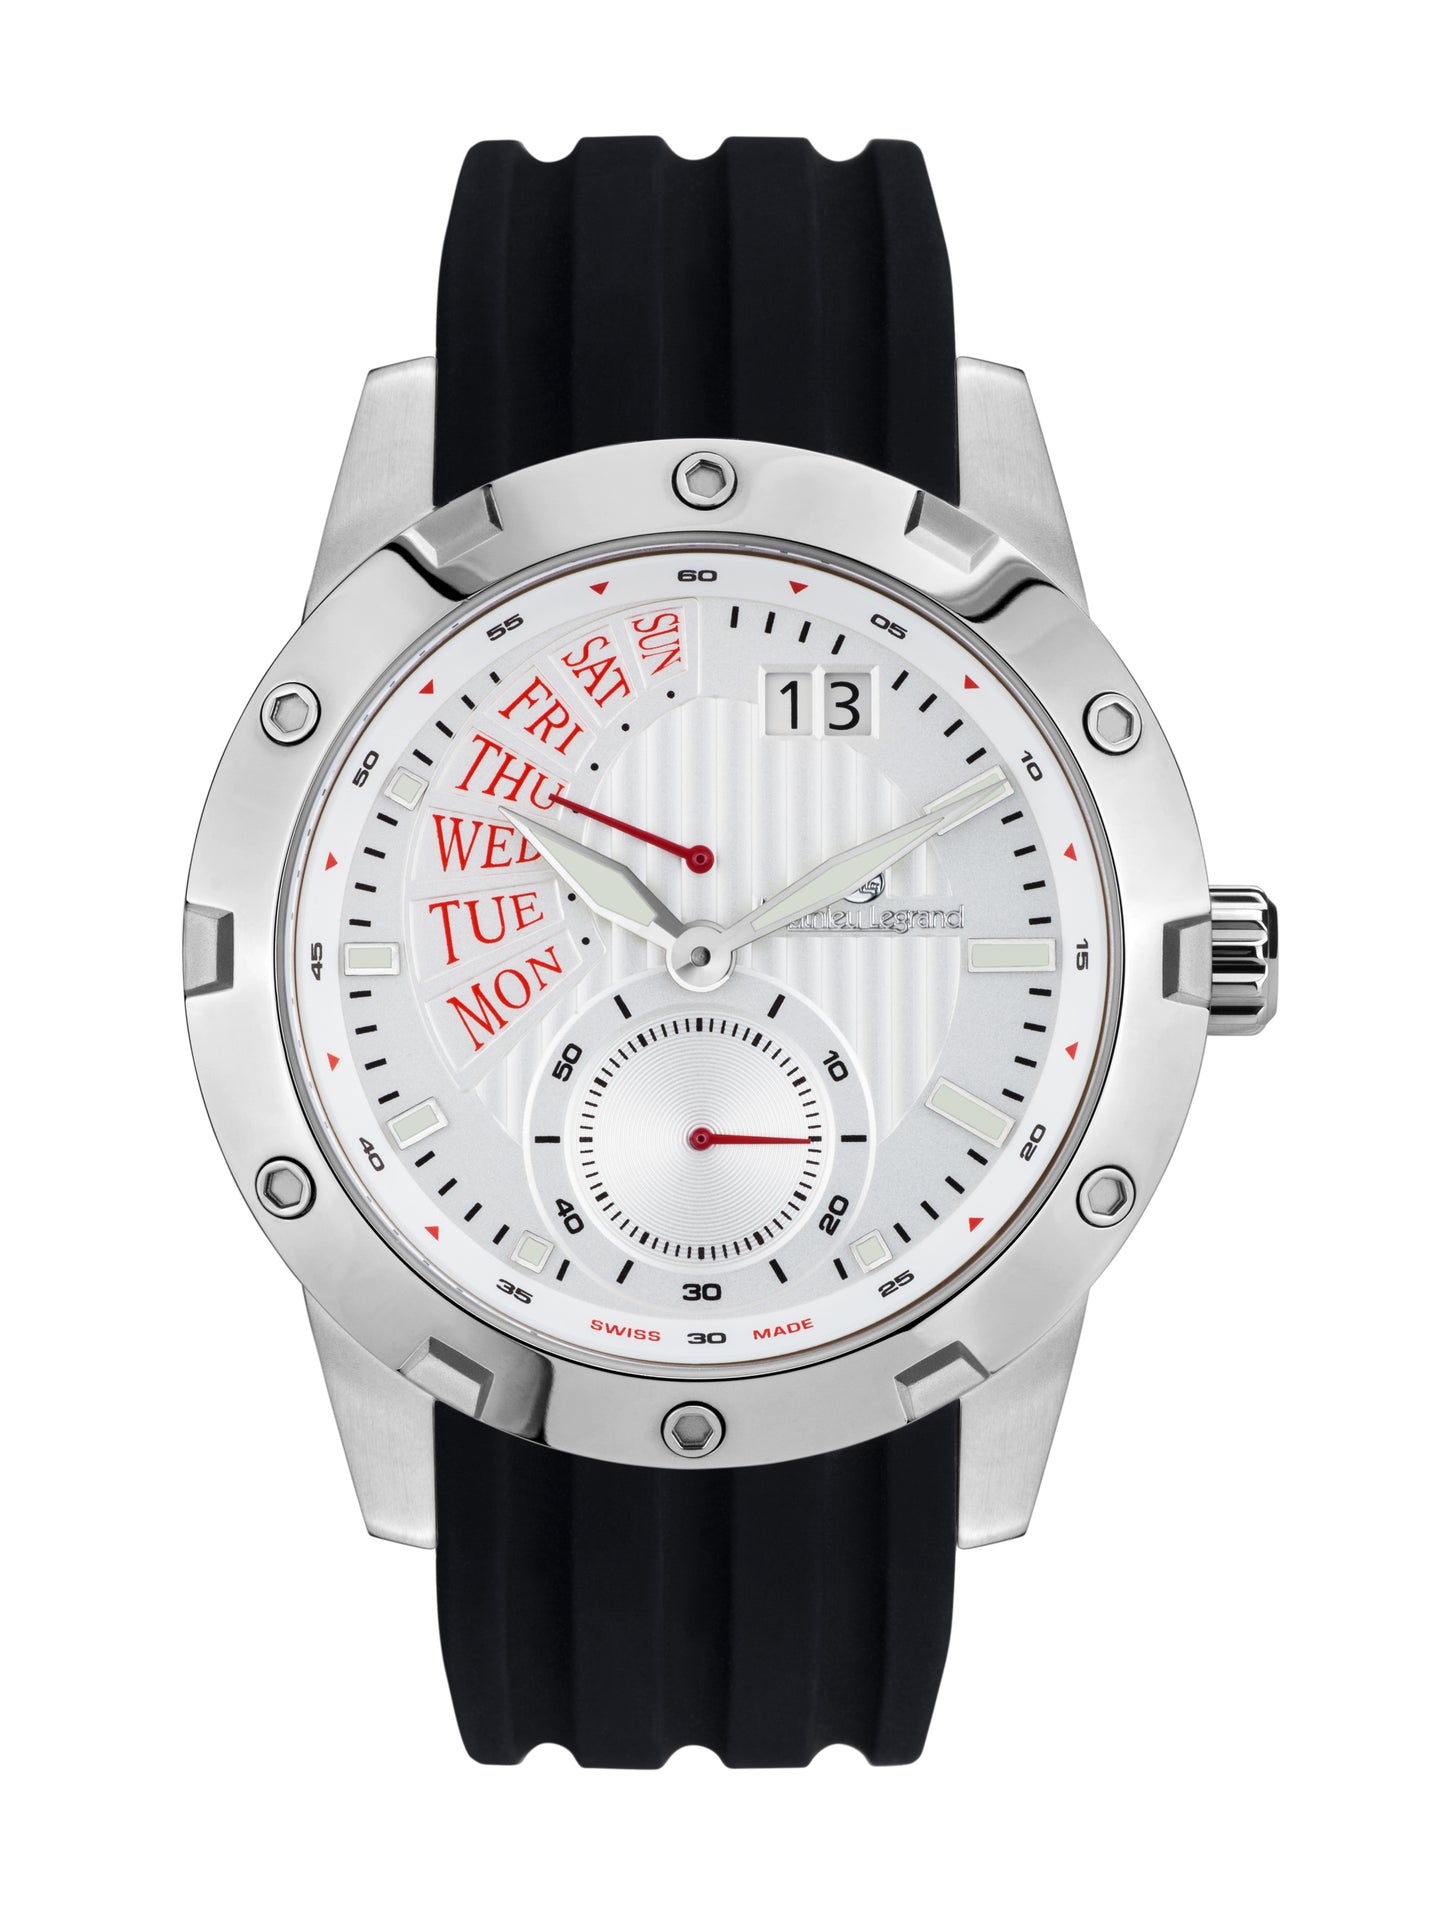 Automatic watches — Survolteur — Mathieu Legrand — steel silver